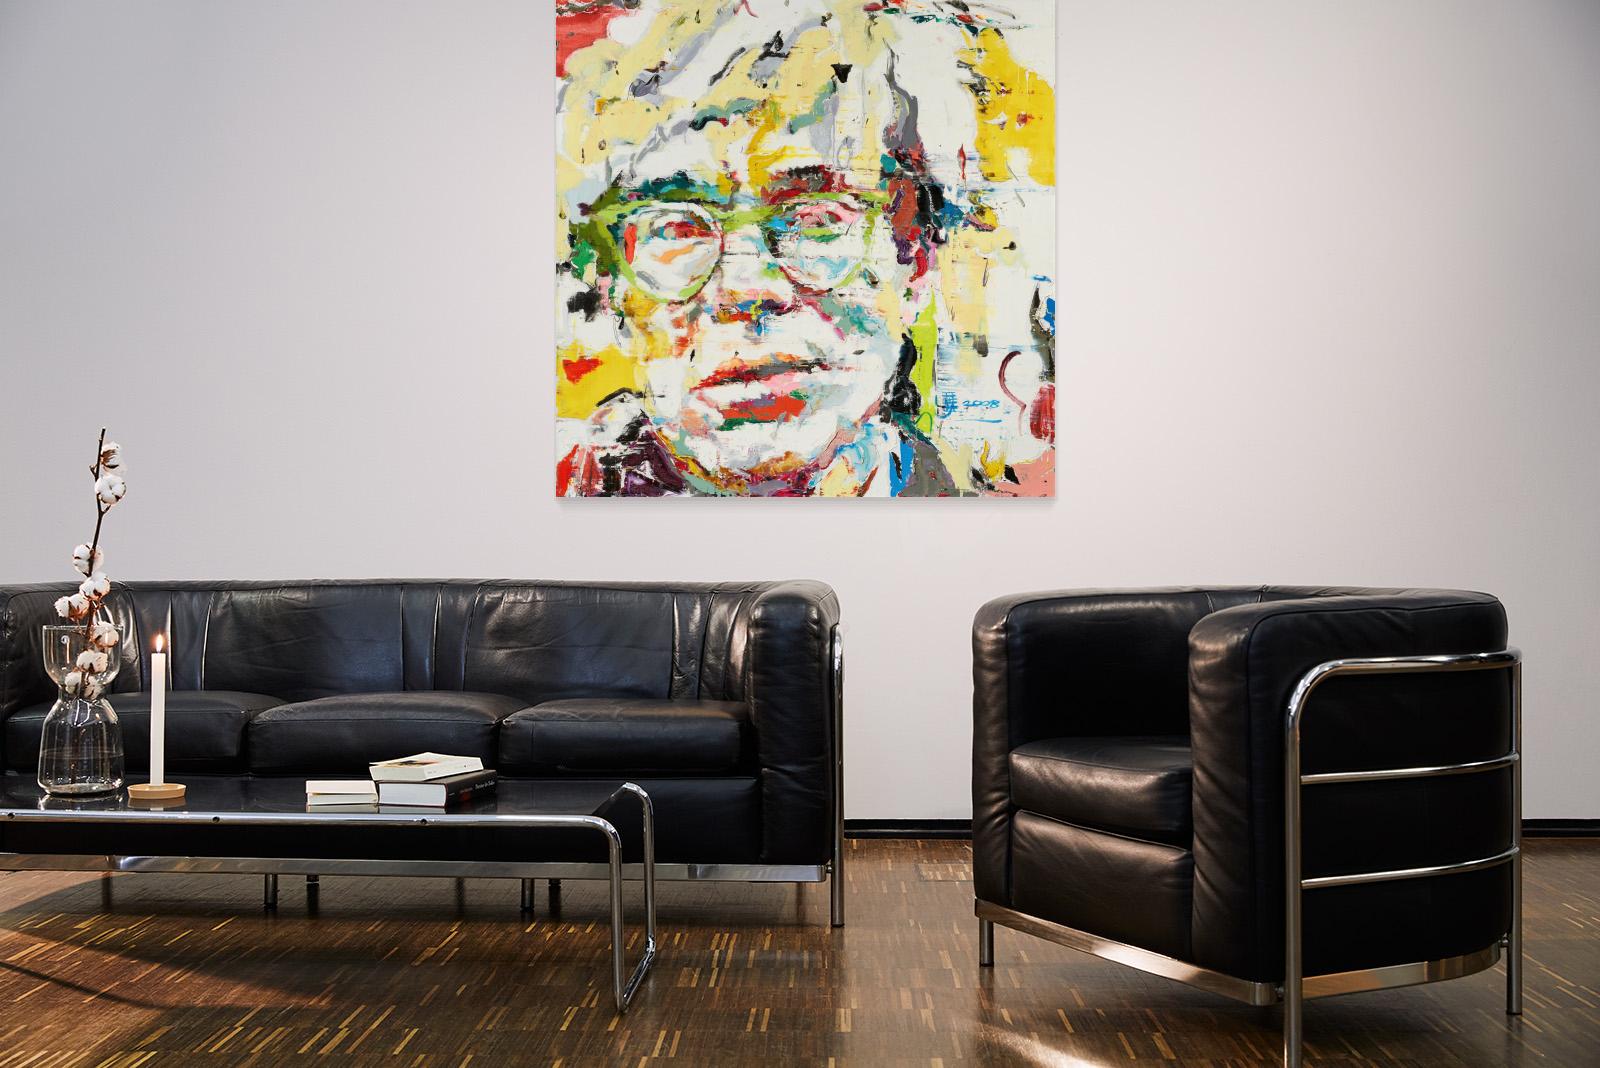 Zhenyu Ren: Andy Warhol - Image 4 of 4